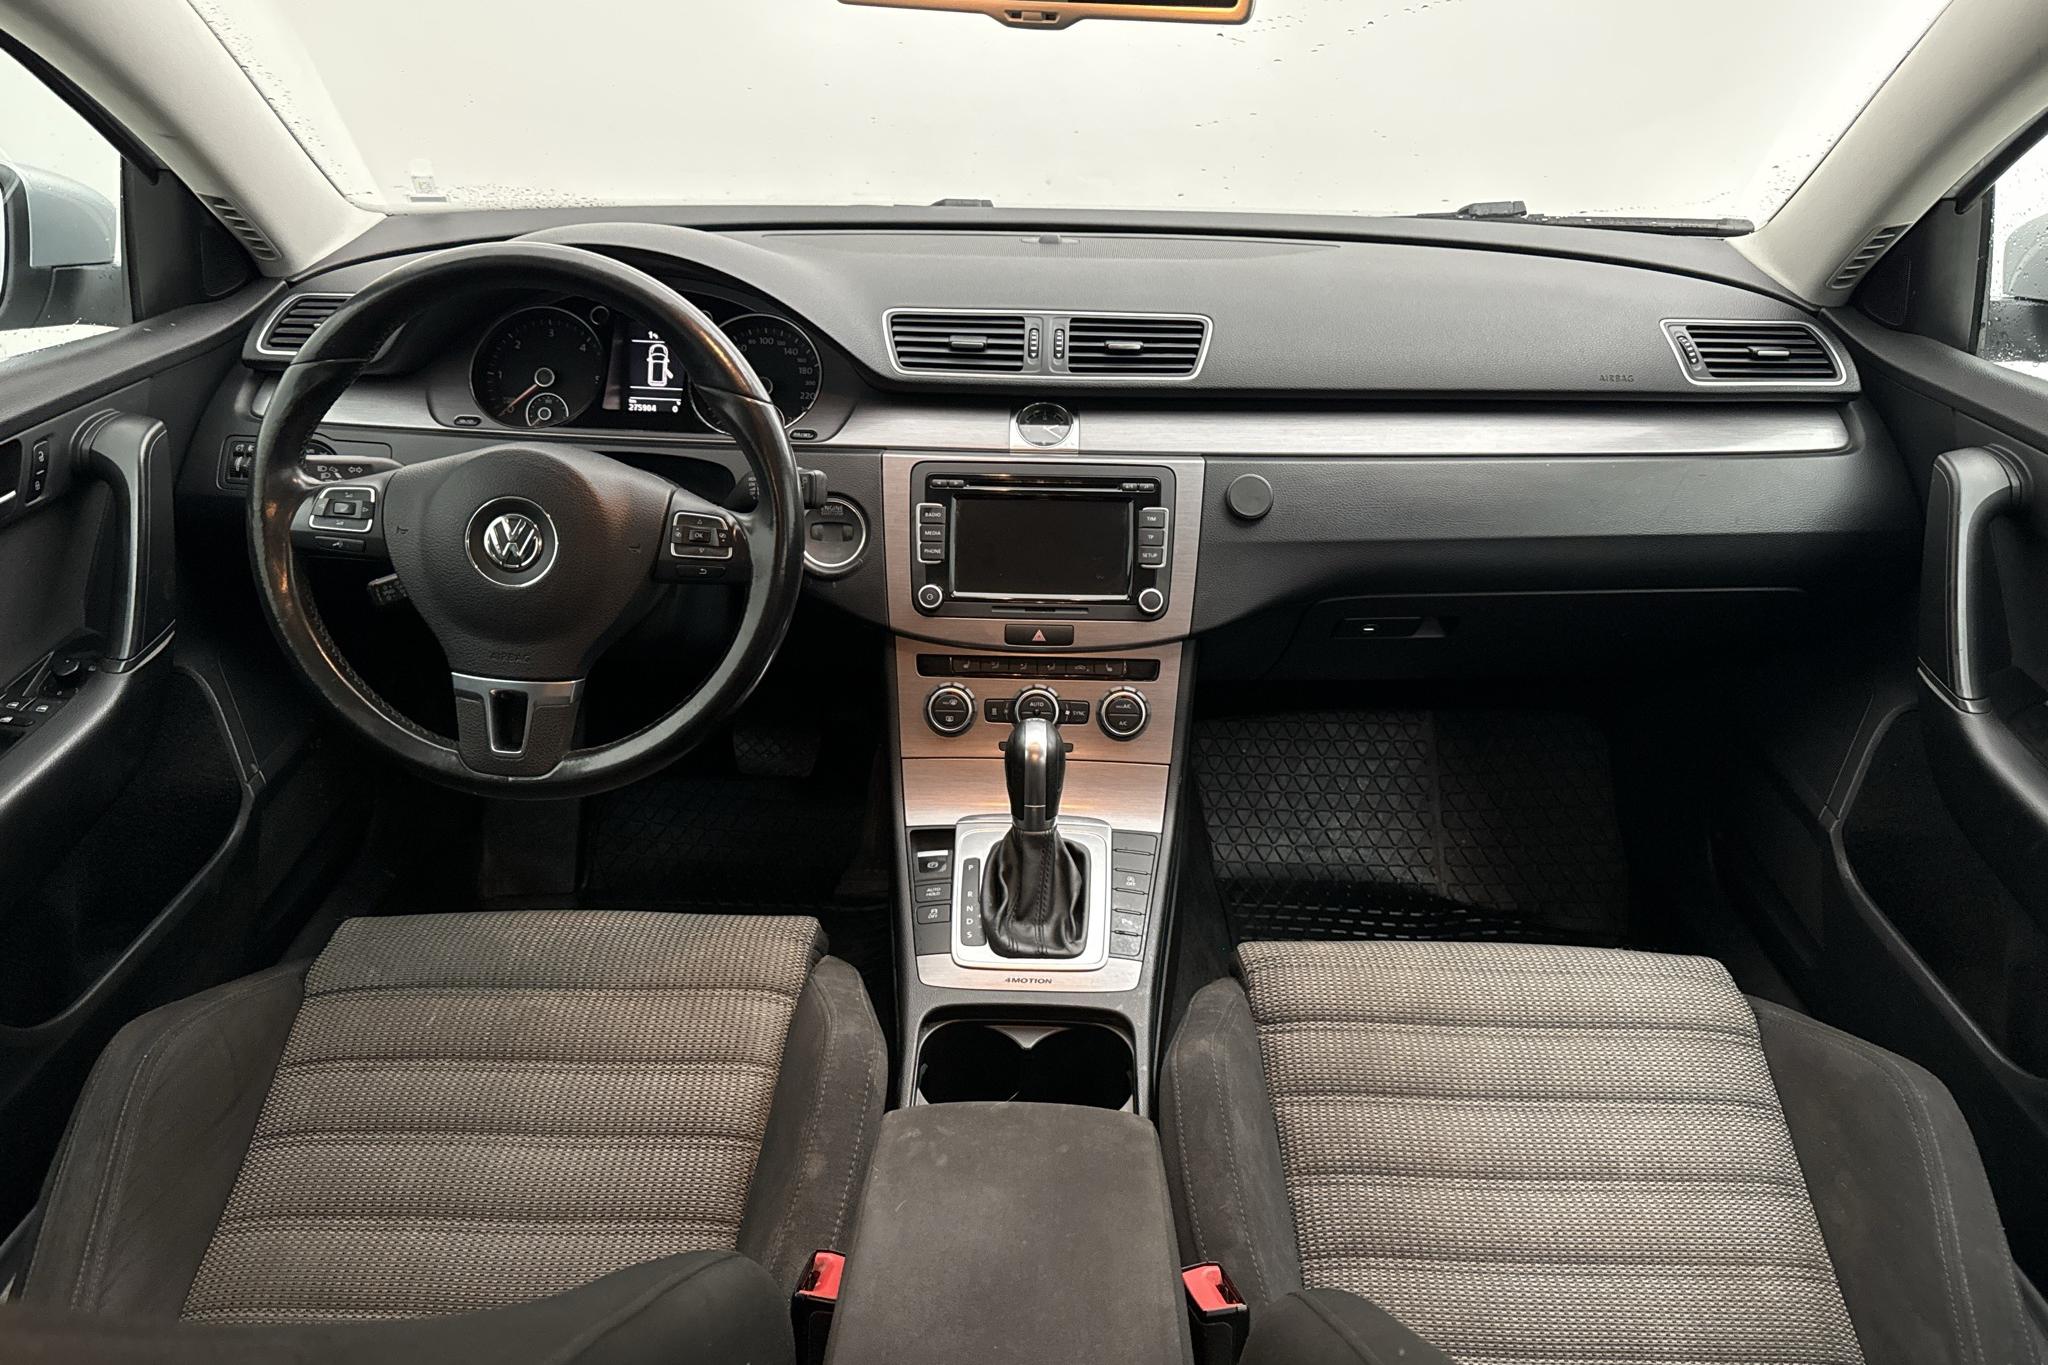 VW Passat 2.0 TDI BlueMotion Technology Variant 4Motion (177hk) - 275 910 km - Automatic - silver - 2015